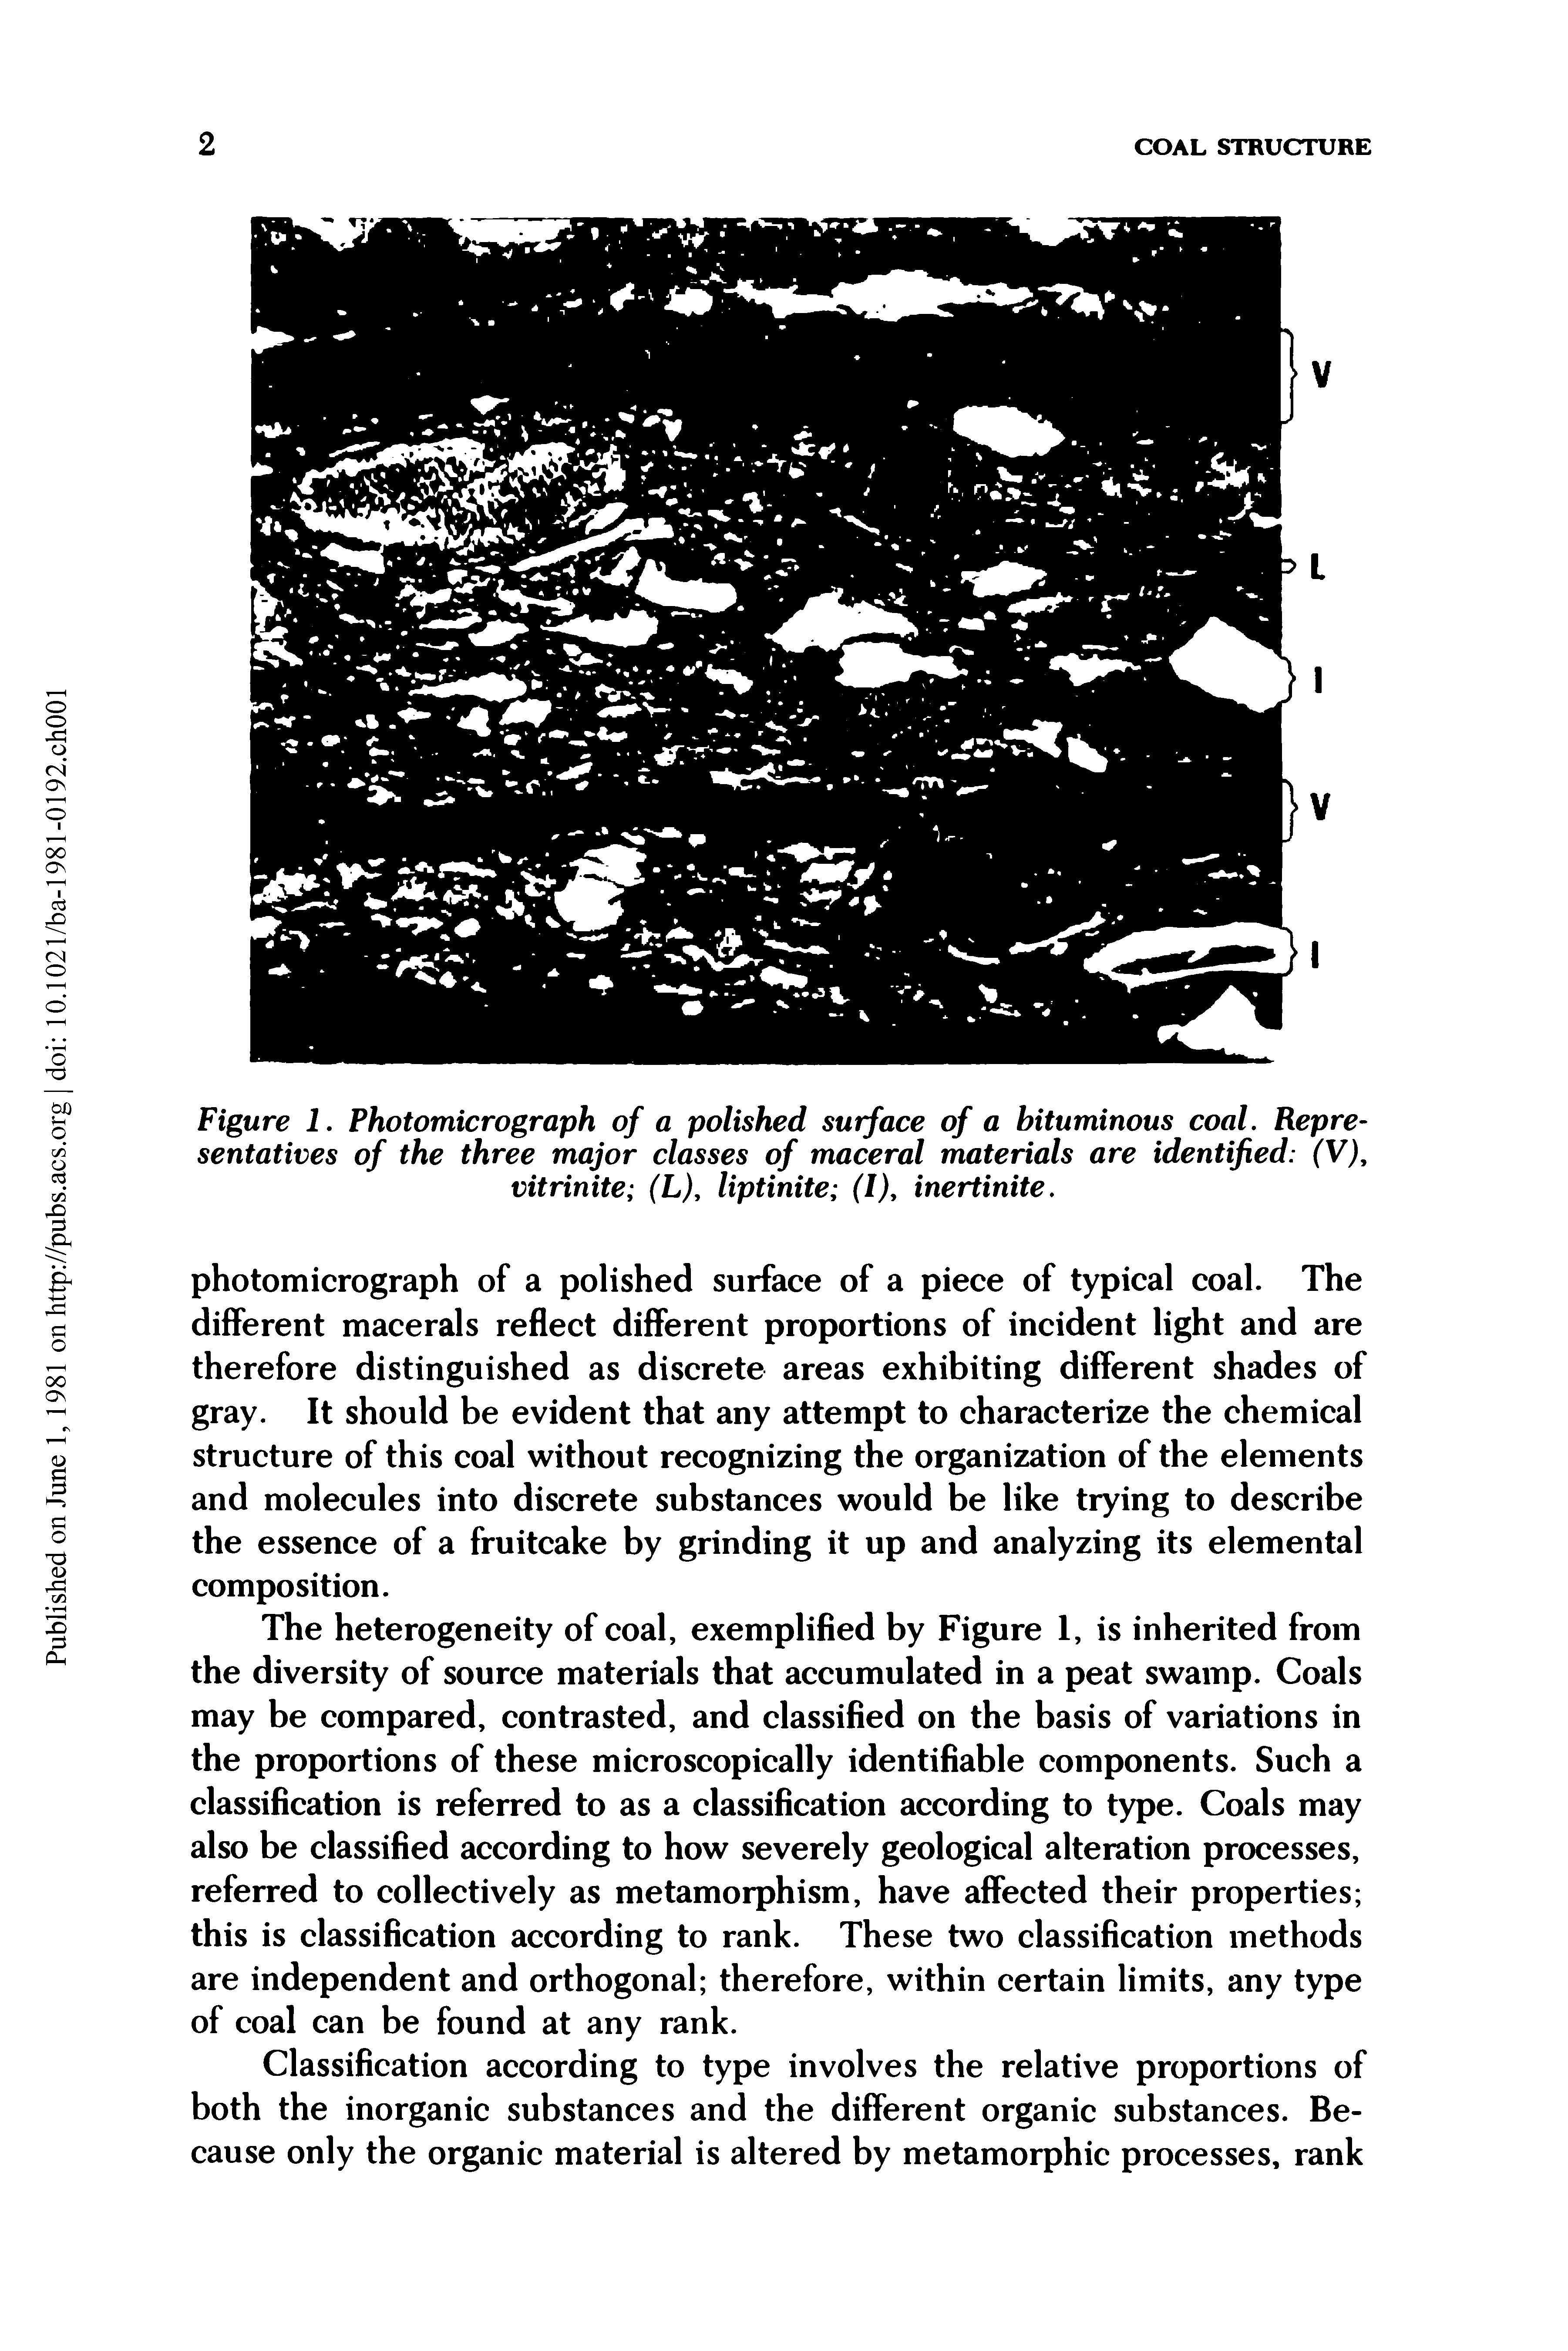 Figure 1. Photomicrograph of a polished surface of a bituminous coal. Representatives of the three major classes of maceral materials are identified (V), vitrinite (L), liptinite (I), inertinite.